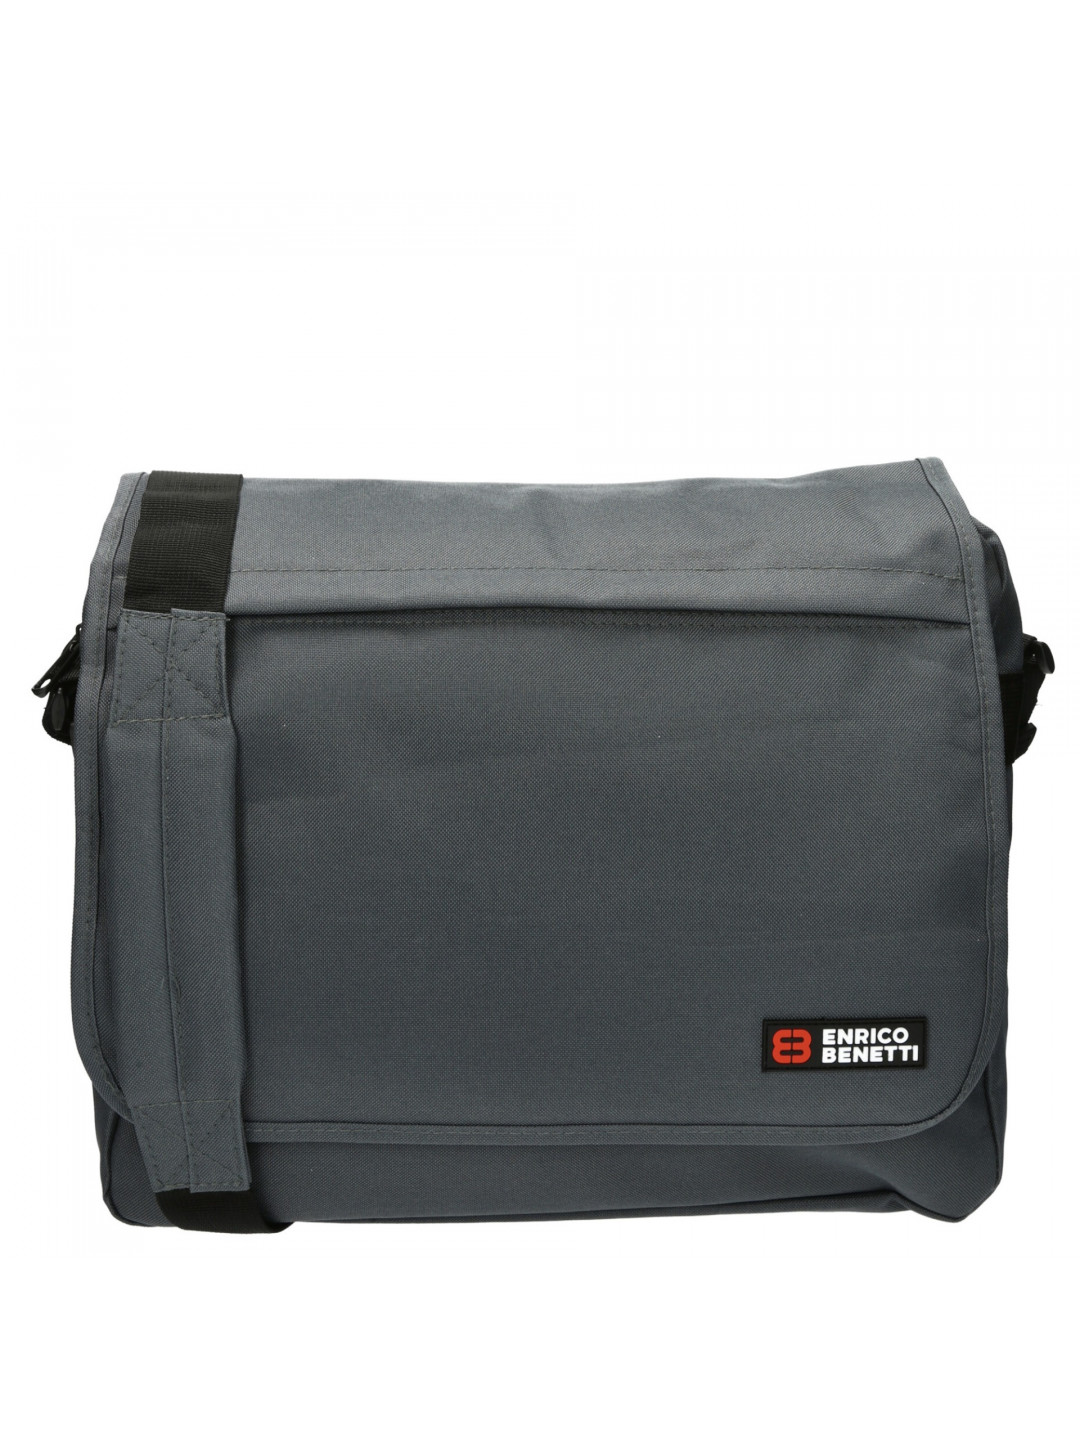 Enrico Benetti Amsterdam Shoulder Bag Grey